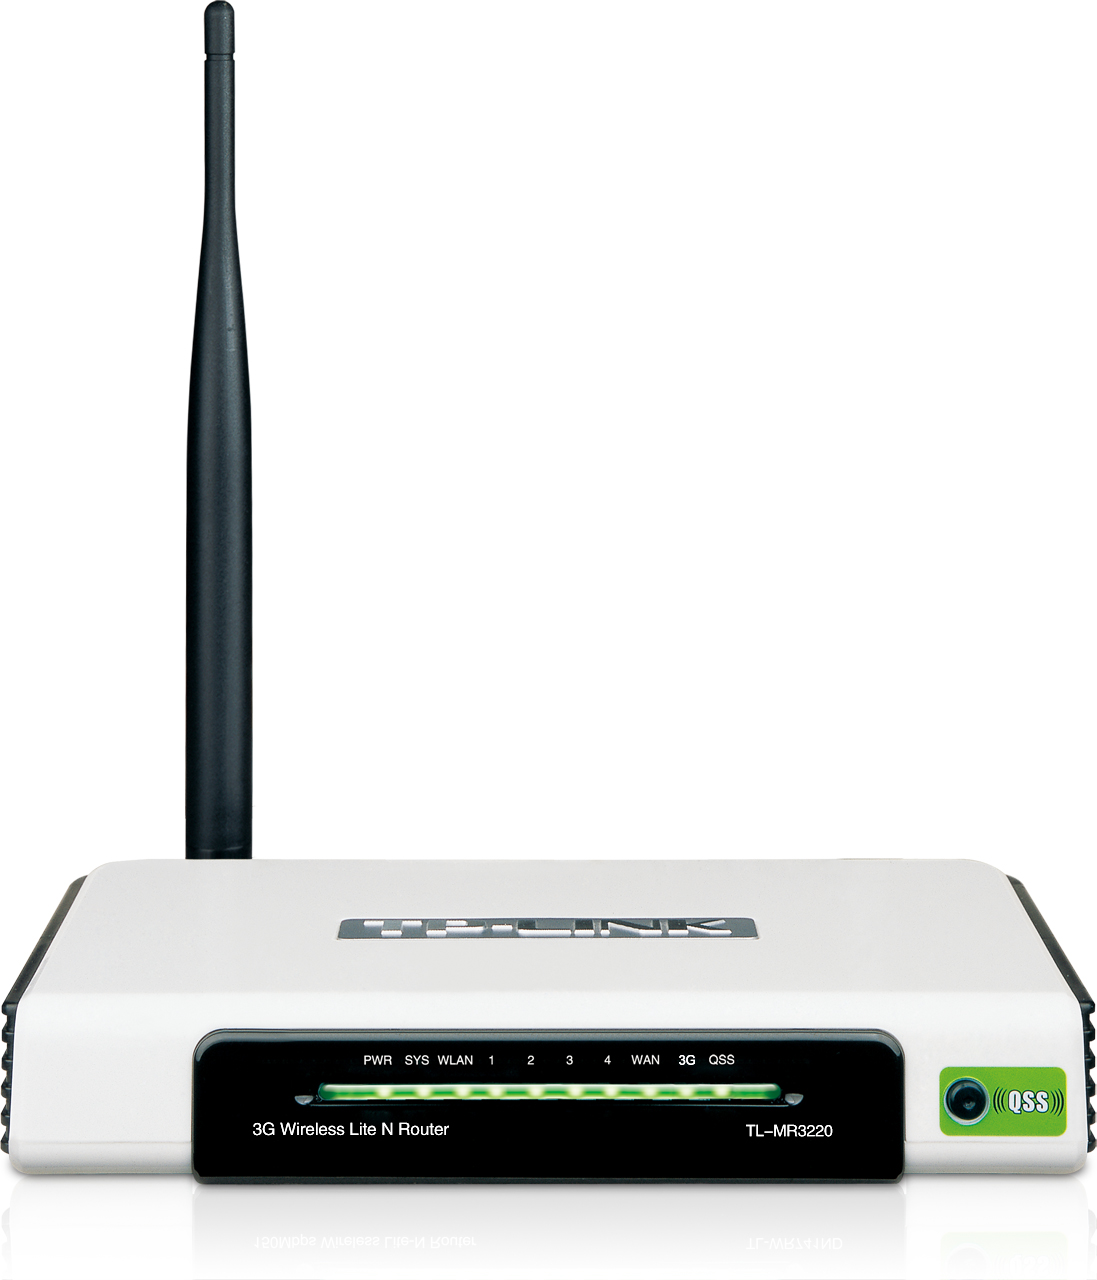 Mengembalikan Firmware Asli 3G Wireless Router TL MR3220 